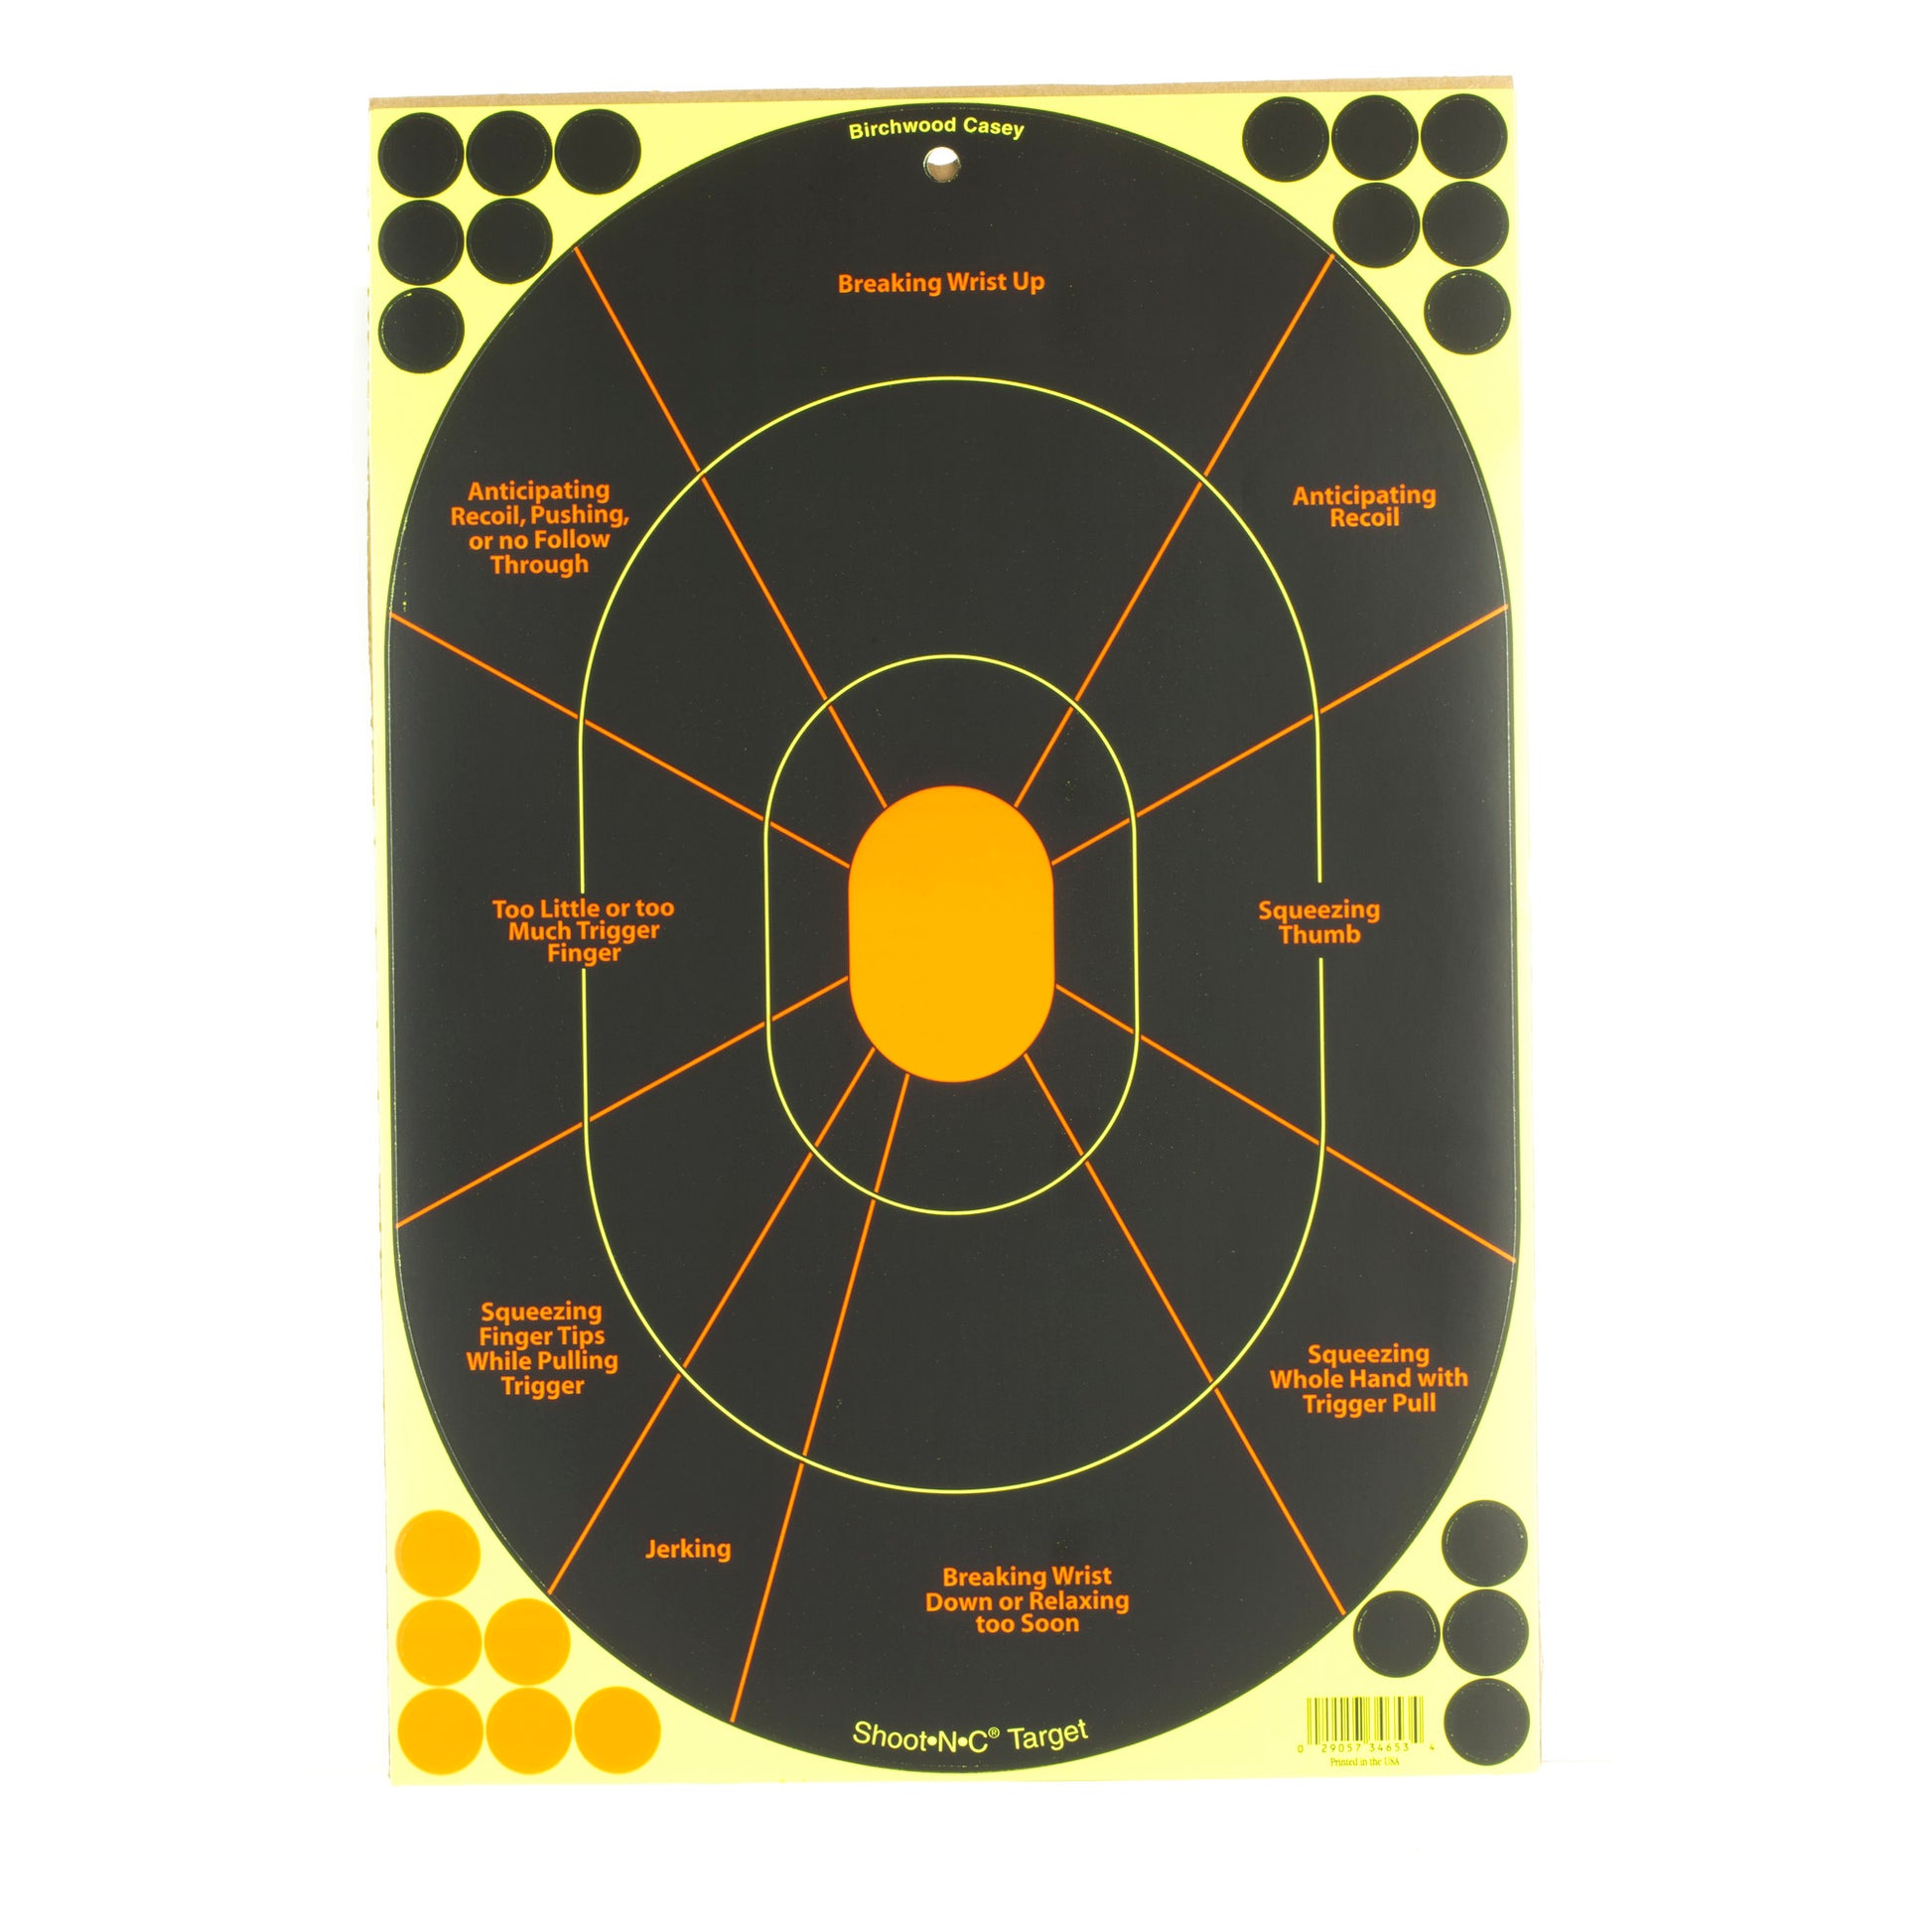 Birchwood Casey Shoot-N-C 12X18 Handgun Trainer 5 Pack BC-34655 - California Shooting Supplies